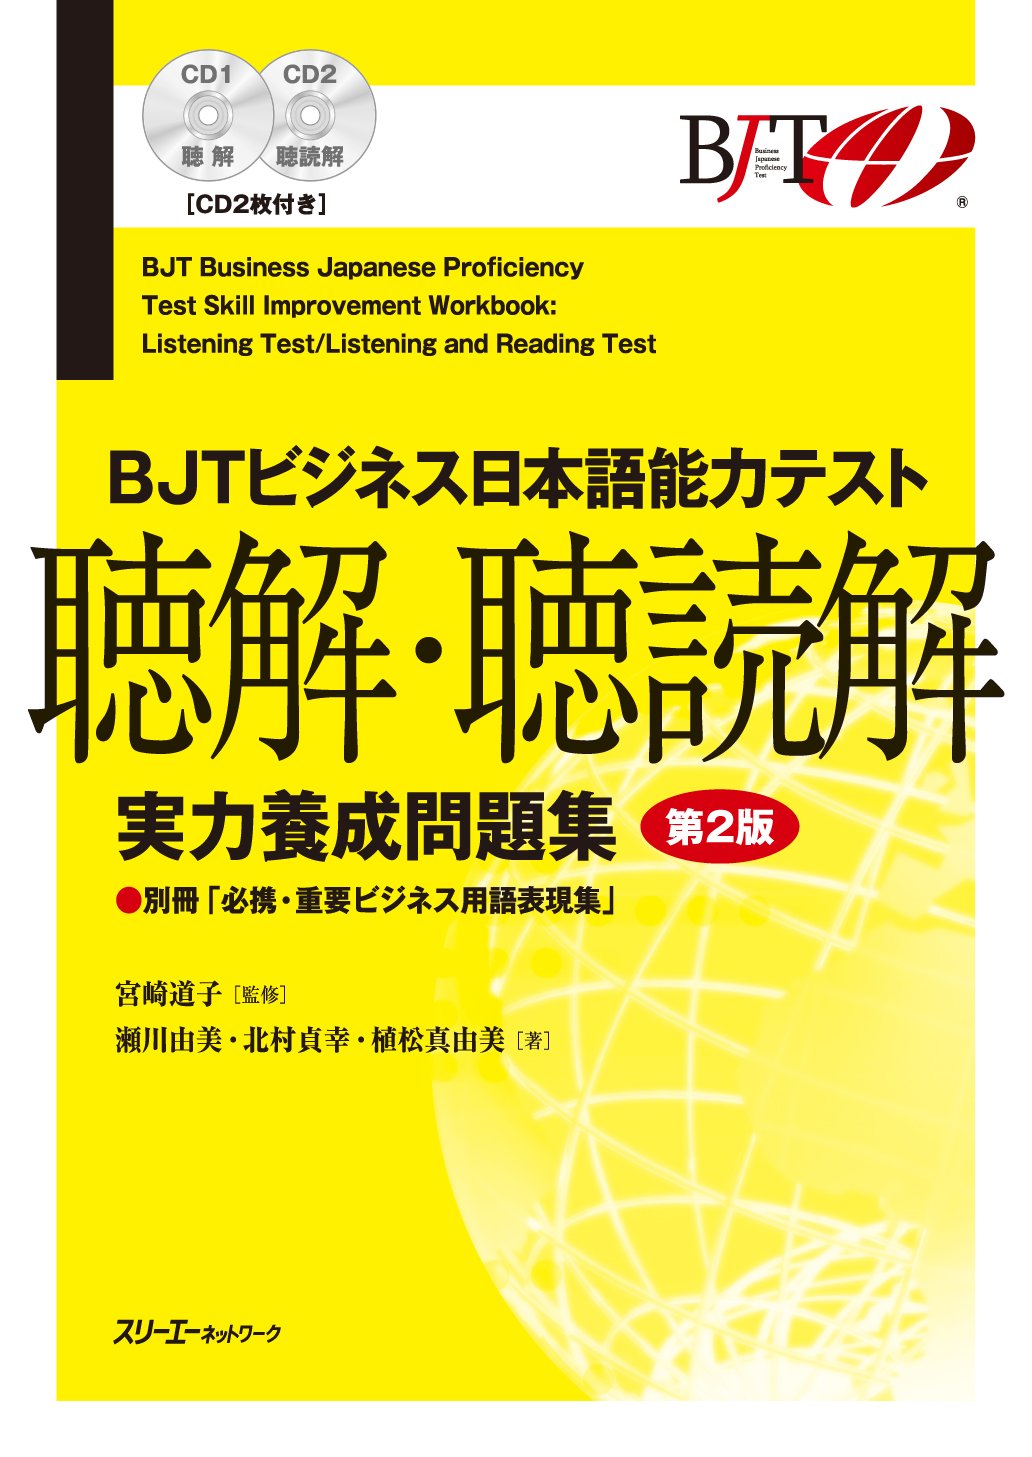 BJT Business Japanese Proficiency Test Skill Improvement Workbook 